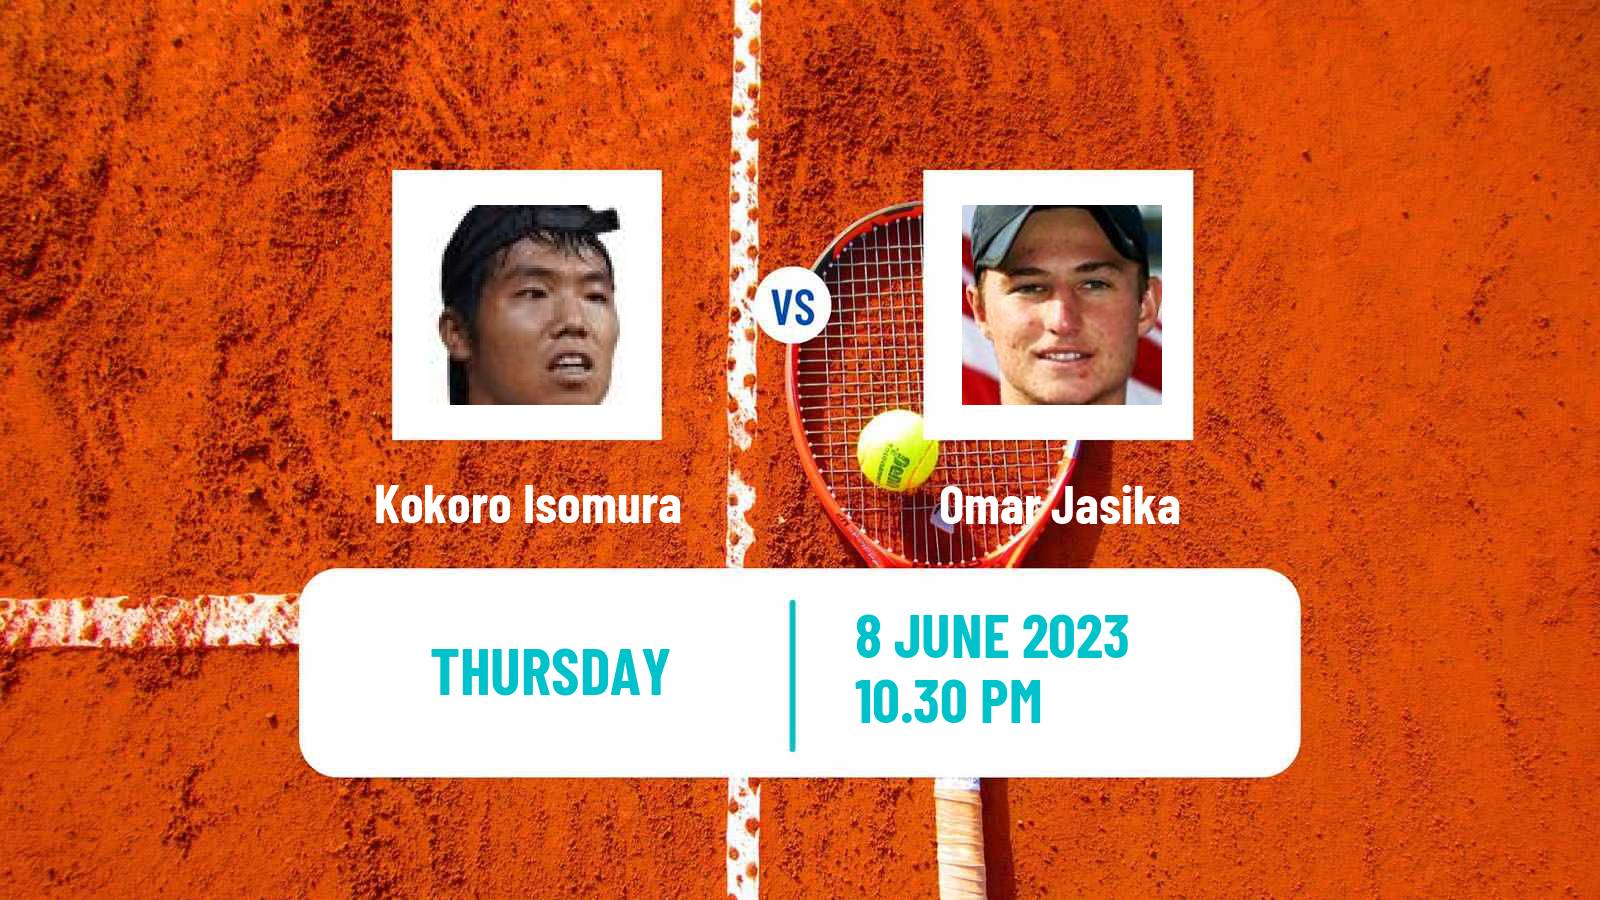 Tennis ITF M25 Jakarta 5 Men Kokoro Isomura - Omar Jasika